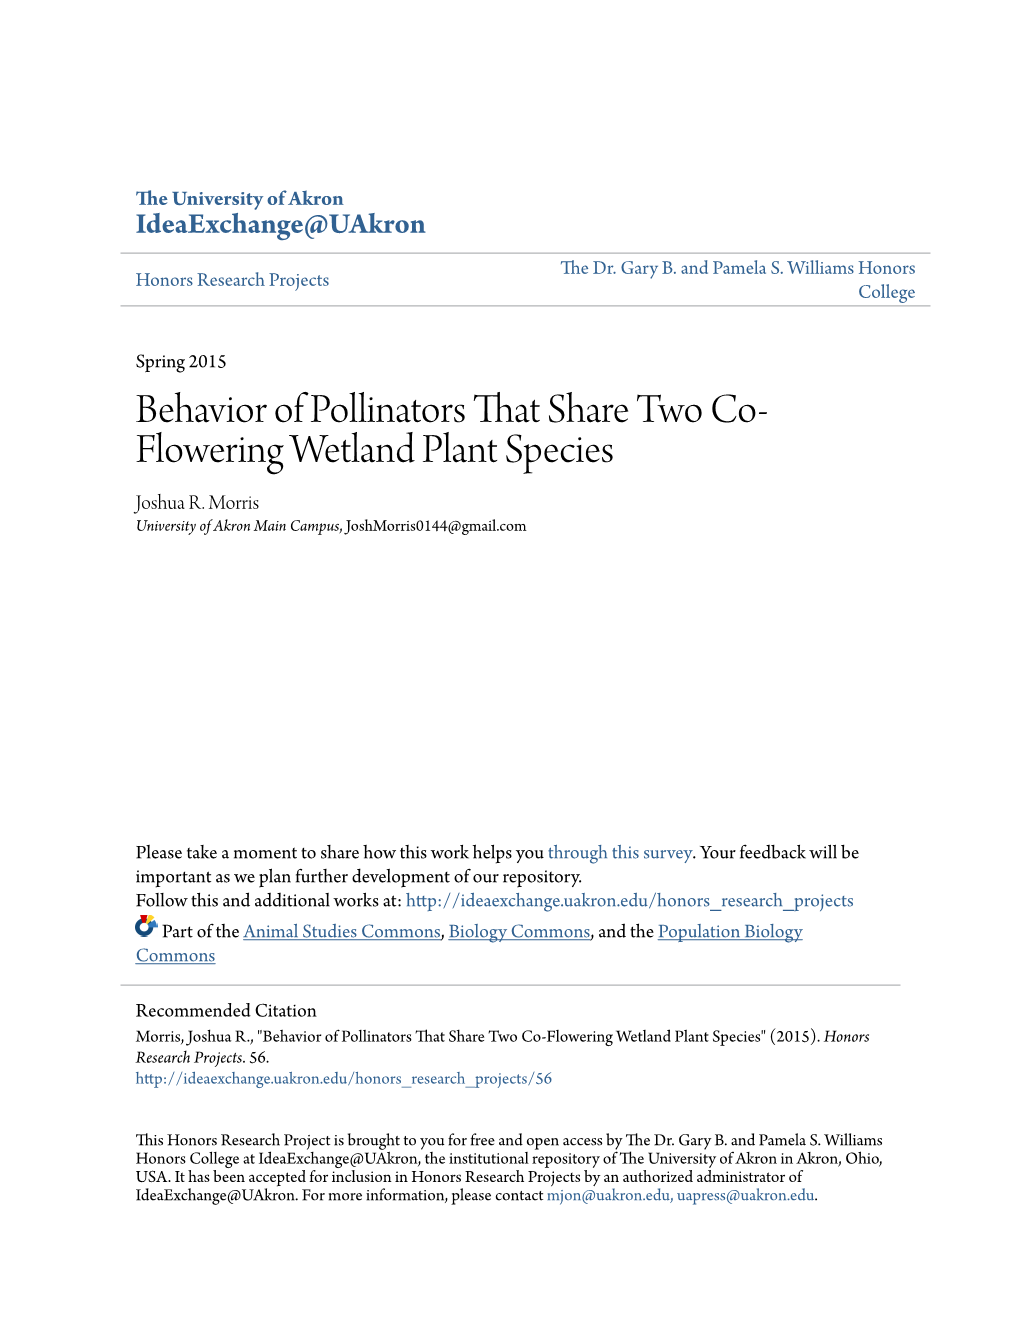 Behavior of Pollinators That Share Two Co-Flowering Wetland Plant Species" (2015)